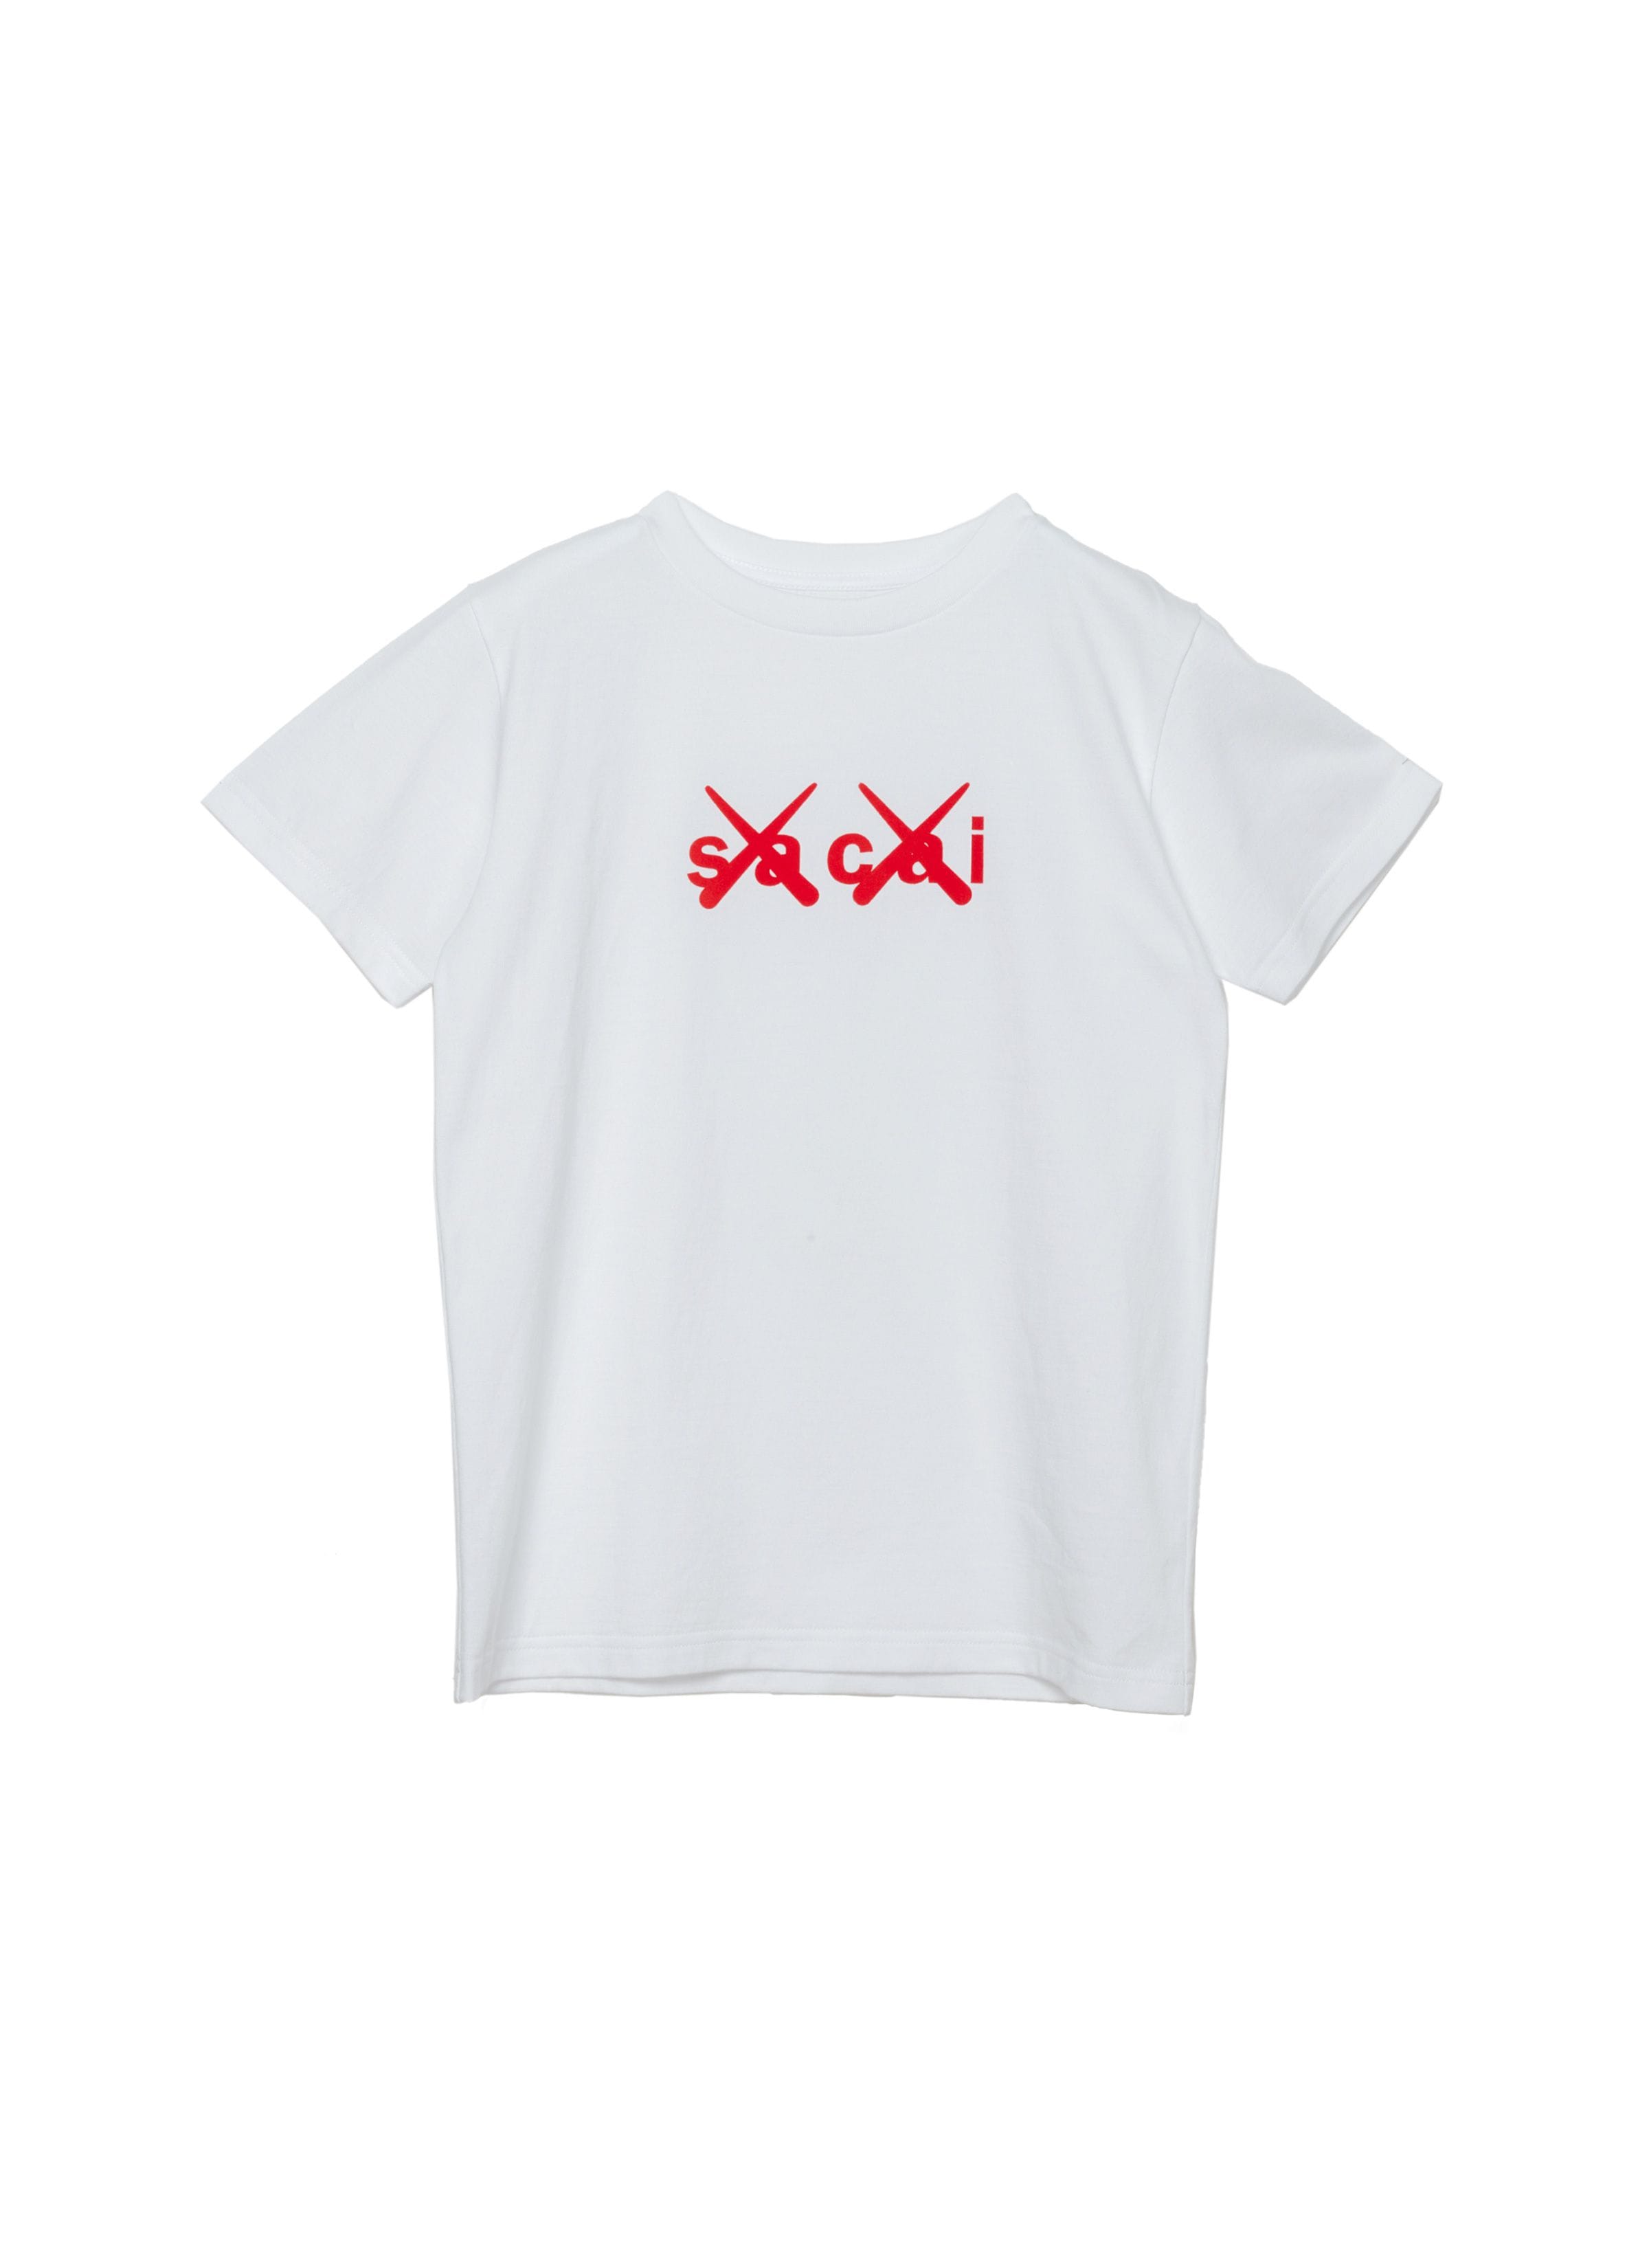 sacai x KAWS / Flock Print T-Shirt 詳細画像 WHITE×RED 4